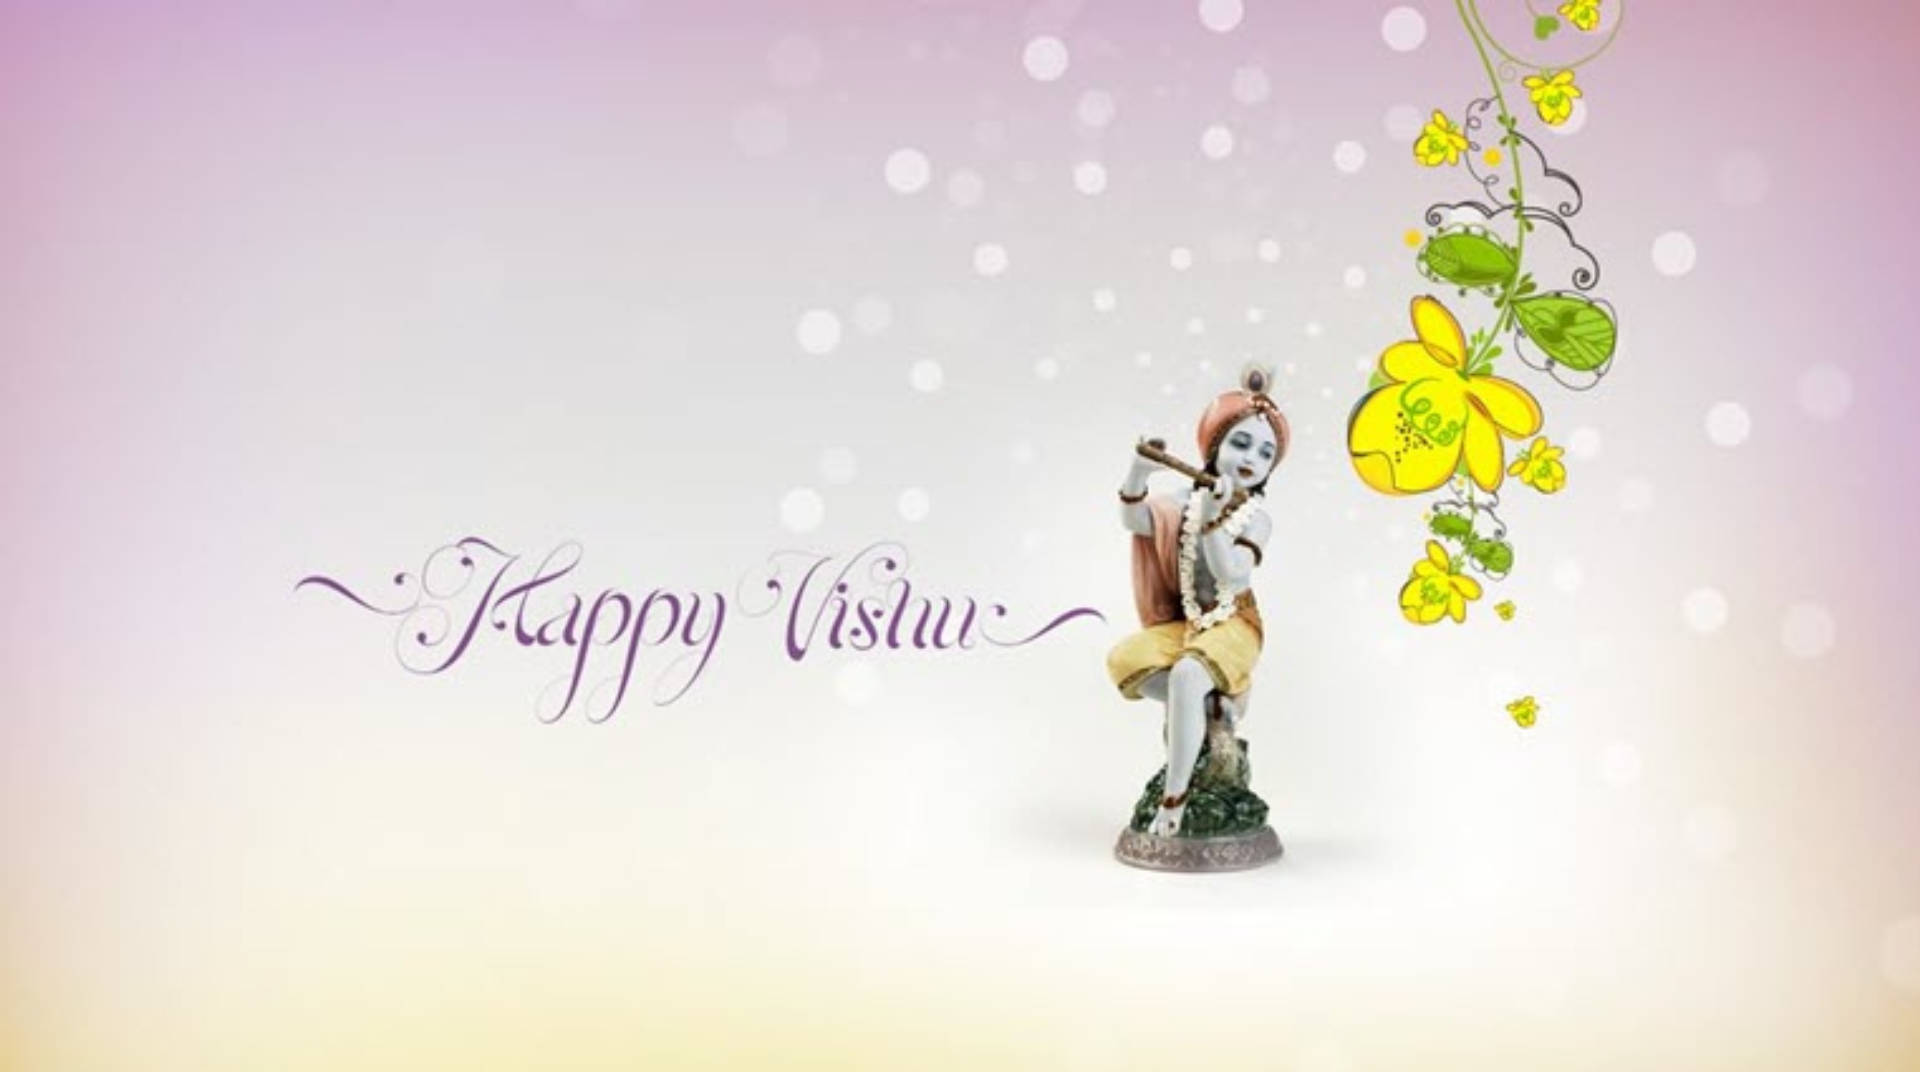 Happy Vishu Greeting With Bokeh Design Wallpaper